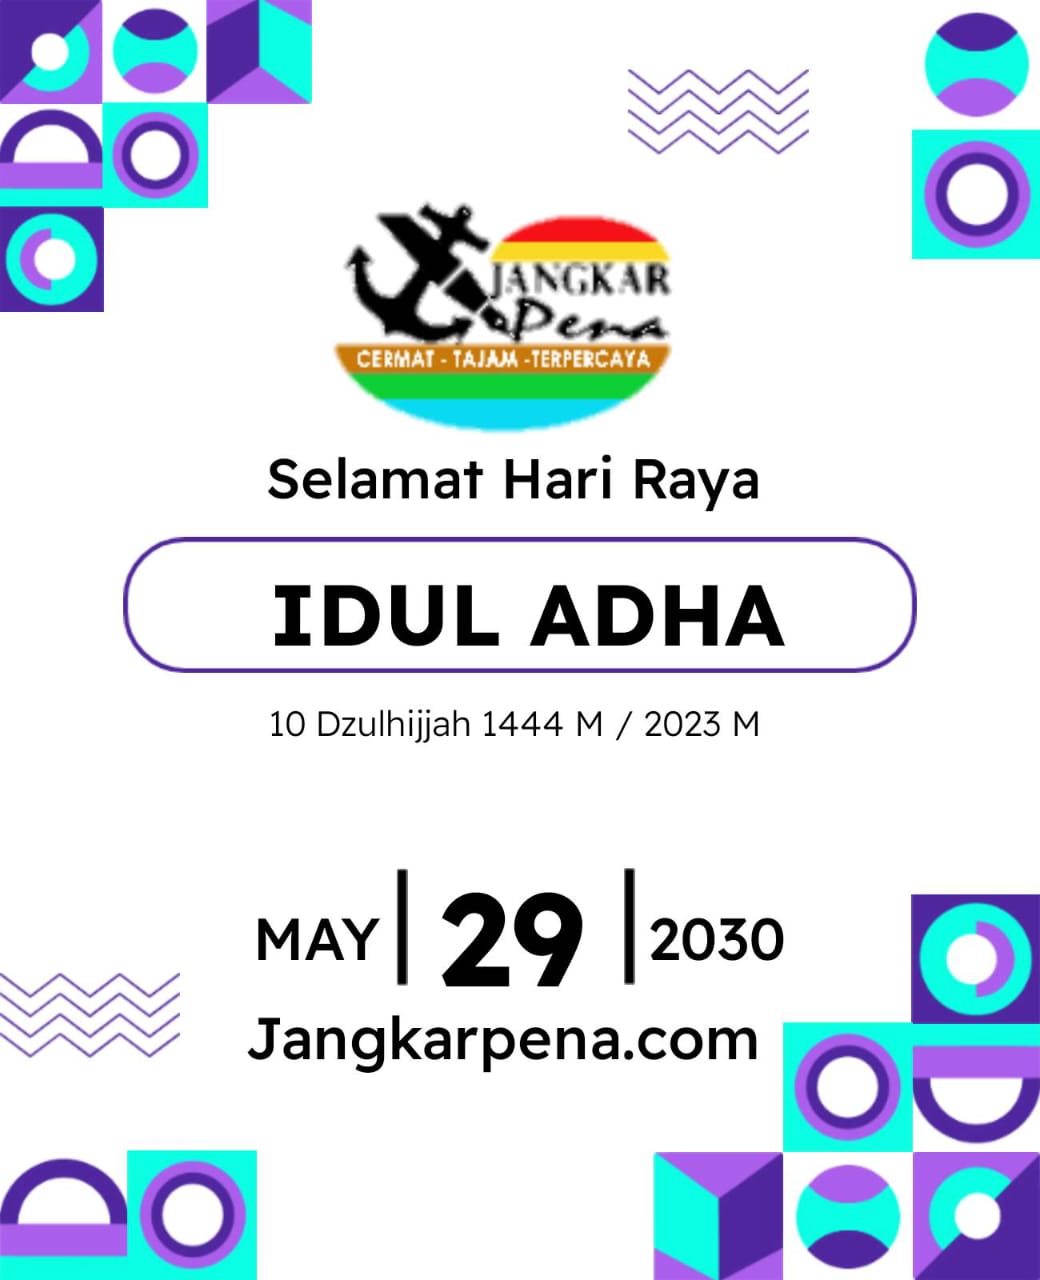 Pimpinan Redaksi Jangkarpena.com mengucapkan selamat Hari Raya Hari Raya Idul Adha 1444 Hijriah/2023 Masehi